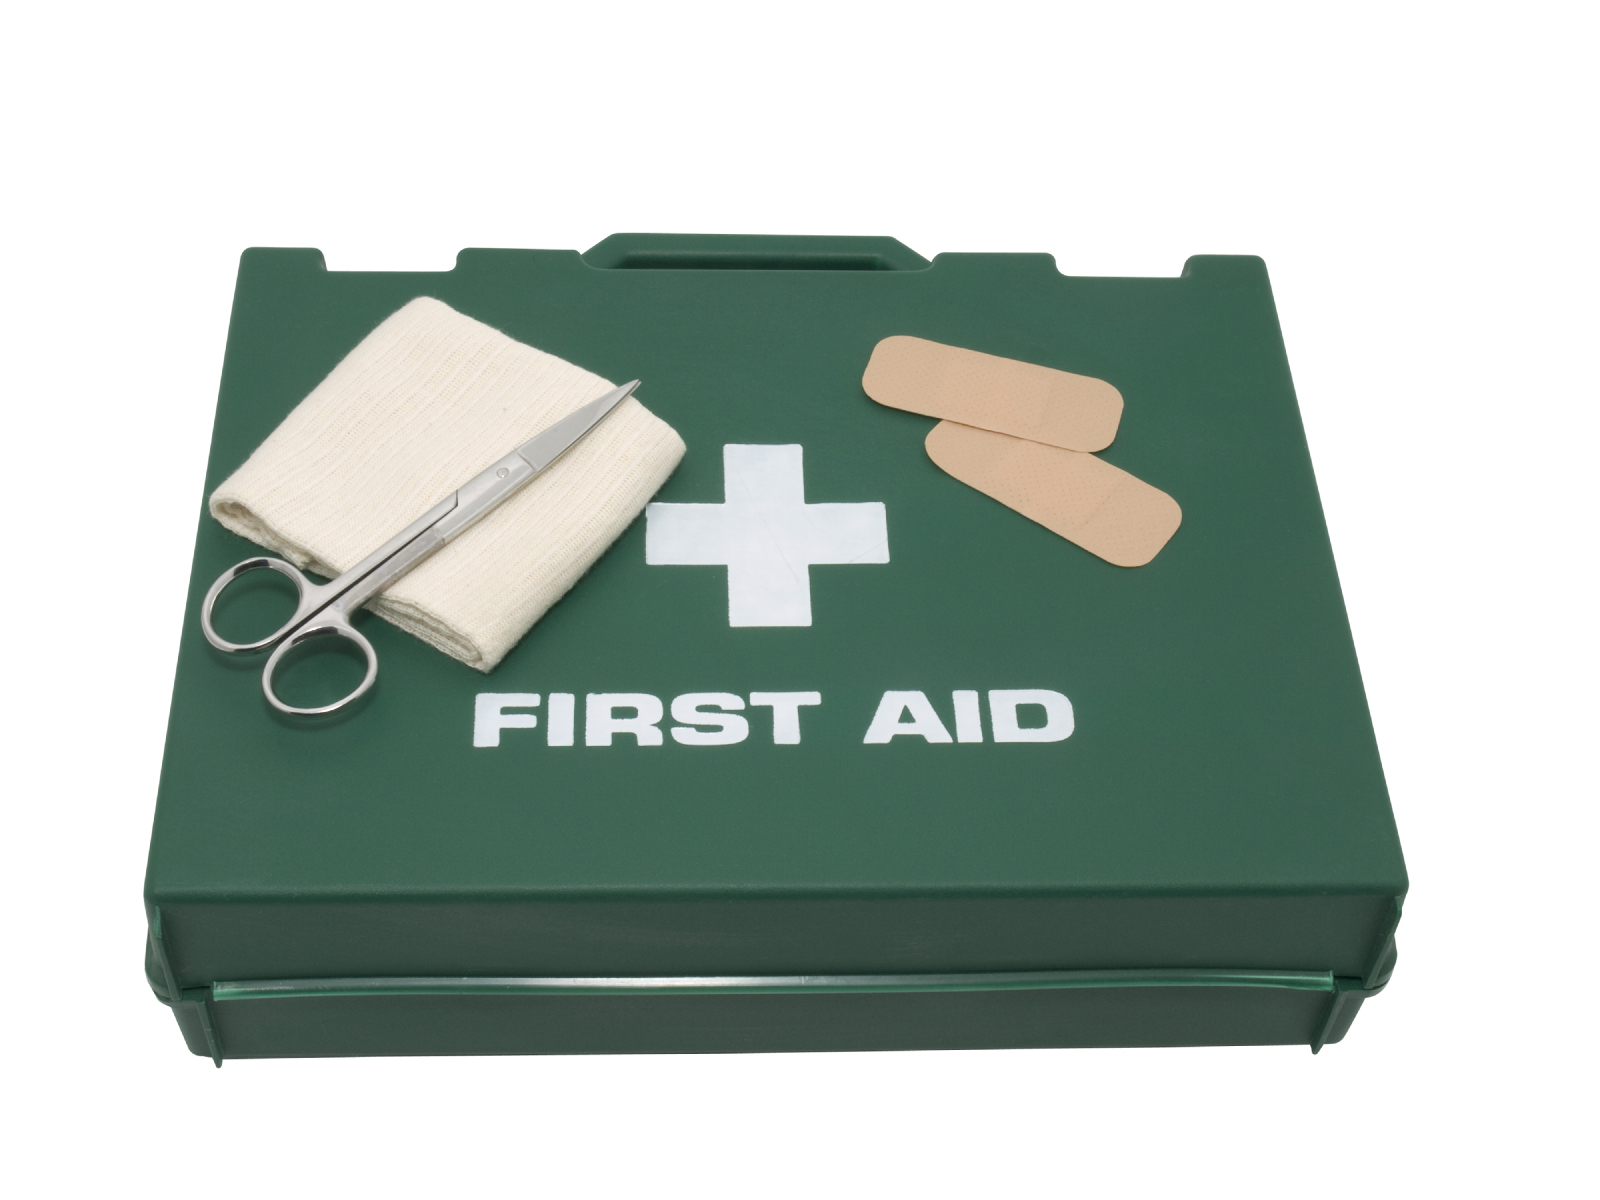 the first aid box